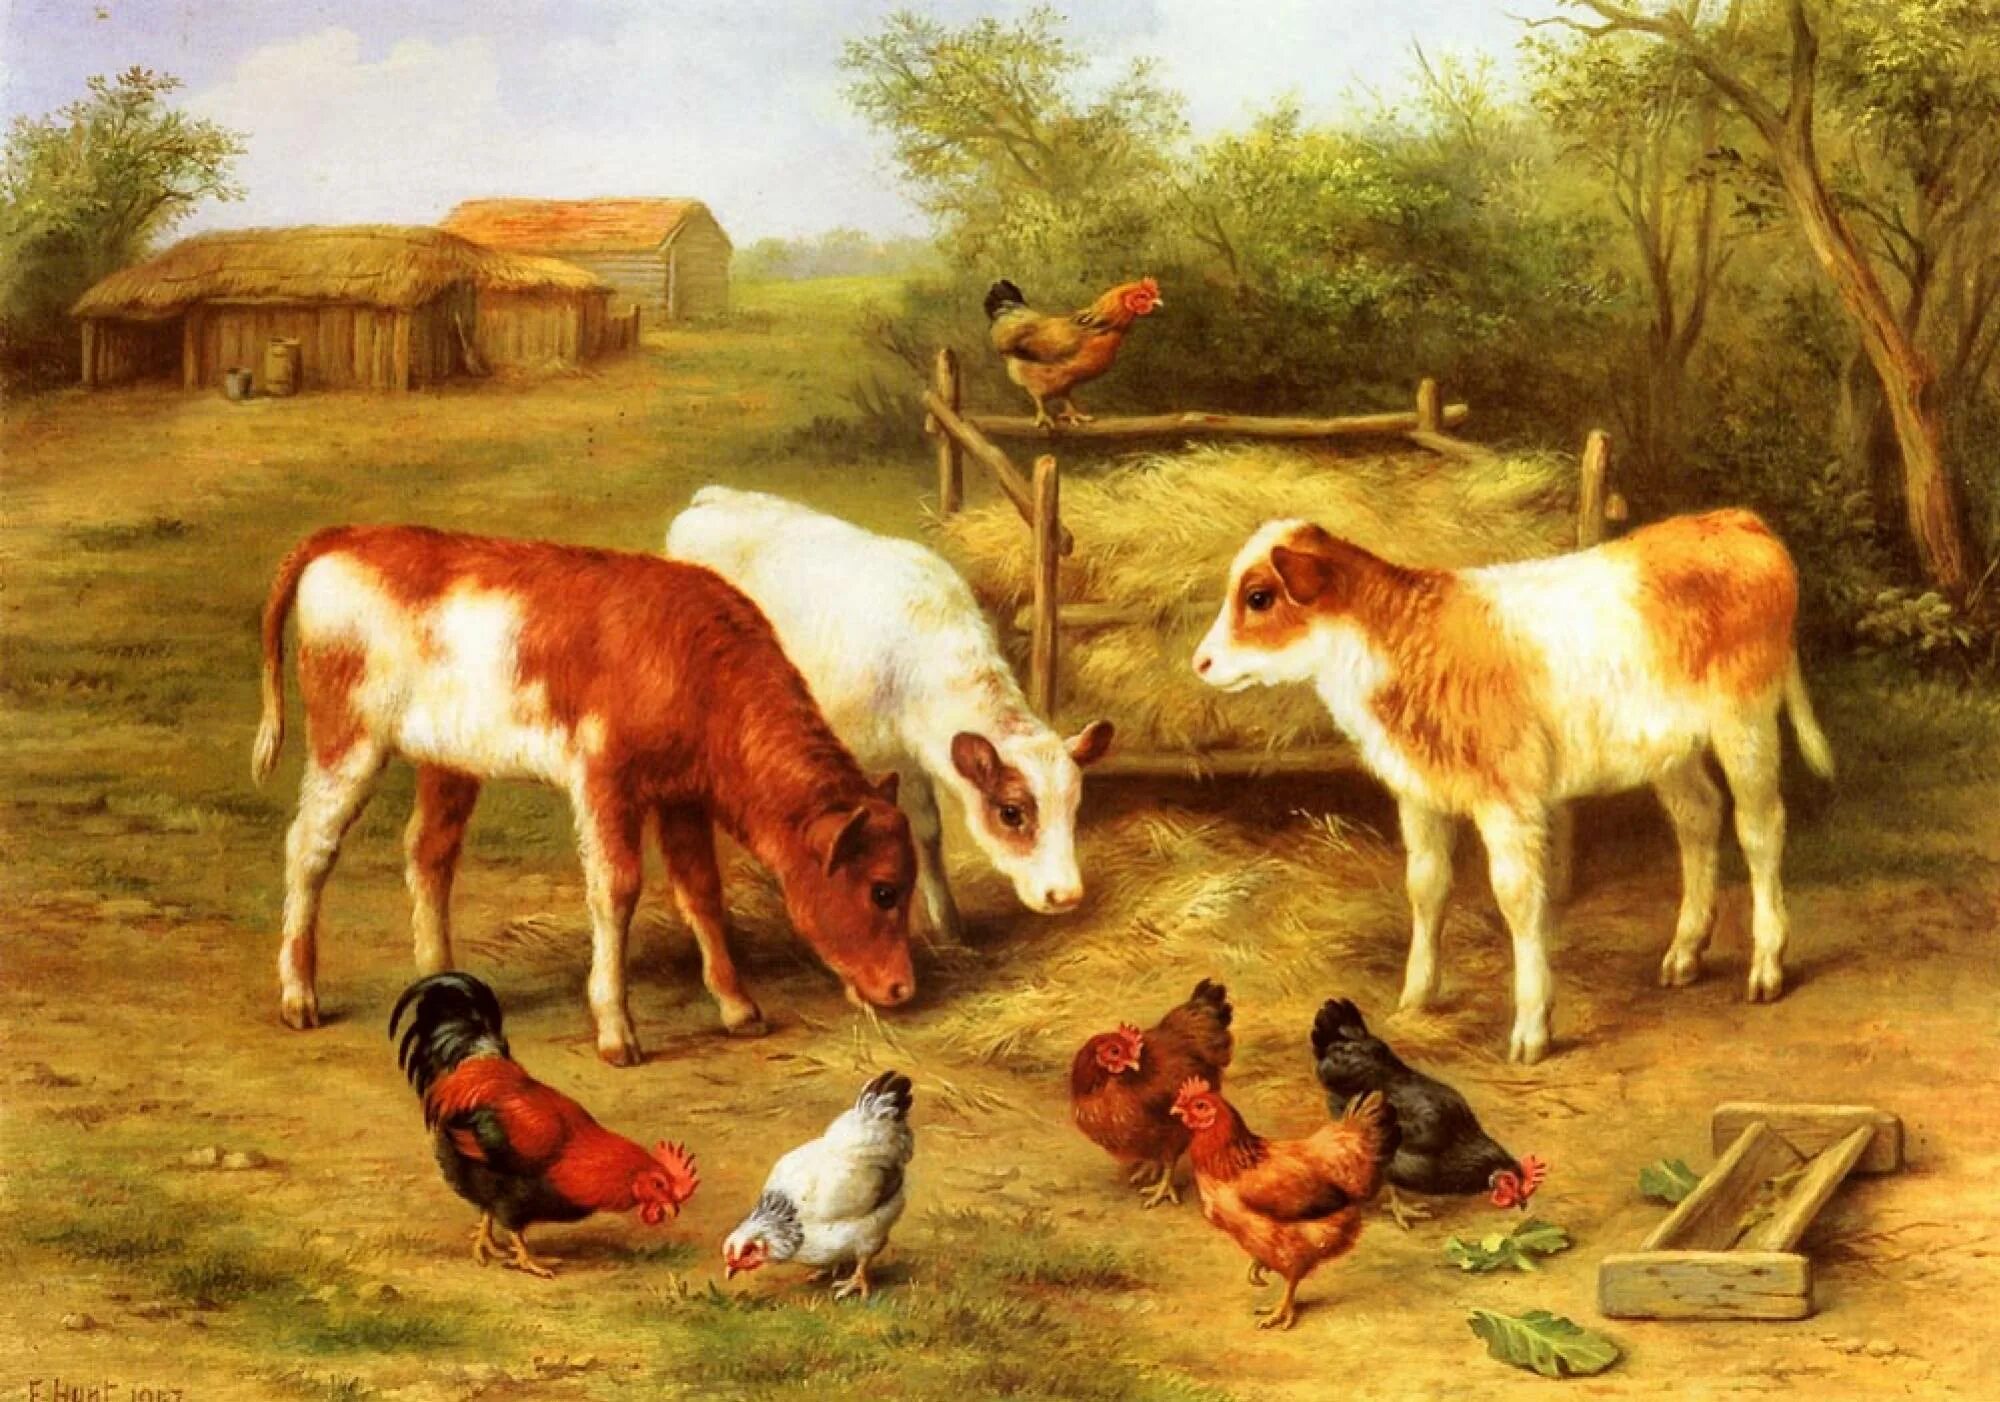 Лошади коровы и куры. Эдгара ханта «Скотный двор»..